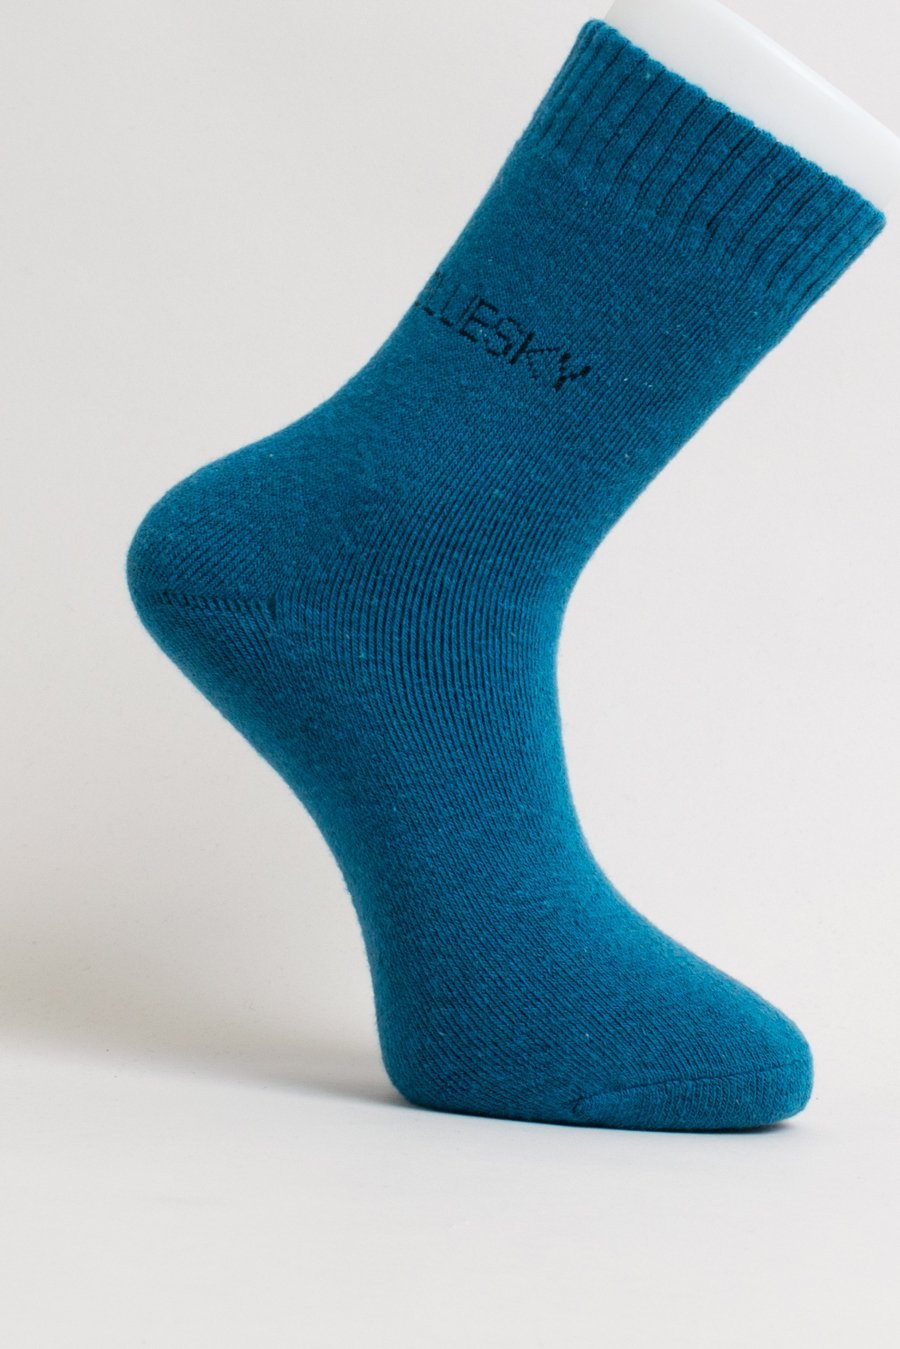 Blue Sky - Men's Merino Wool Socks